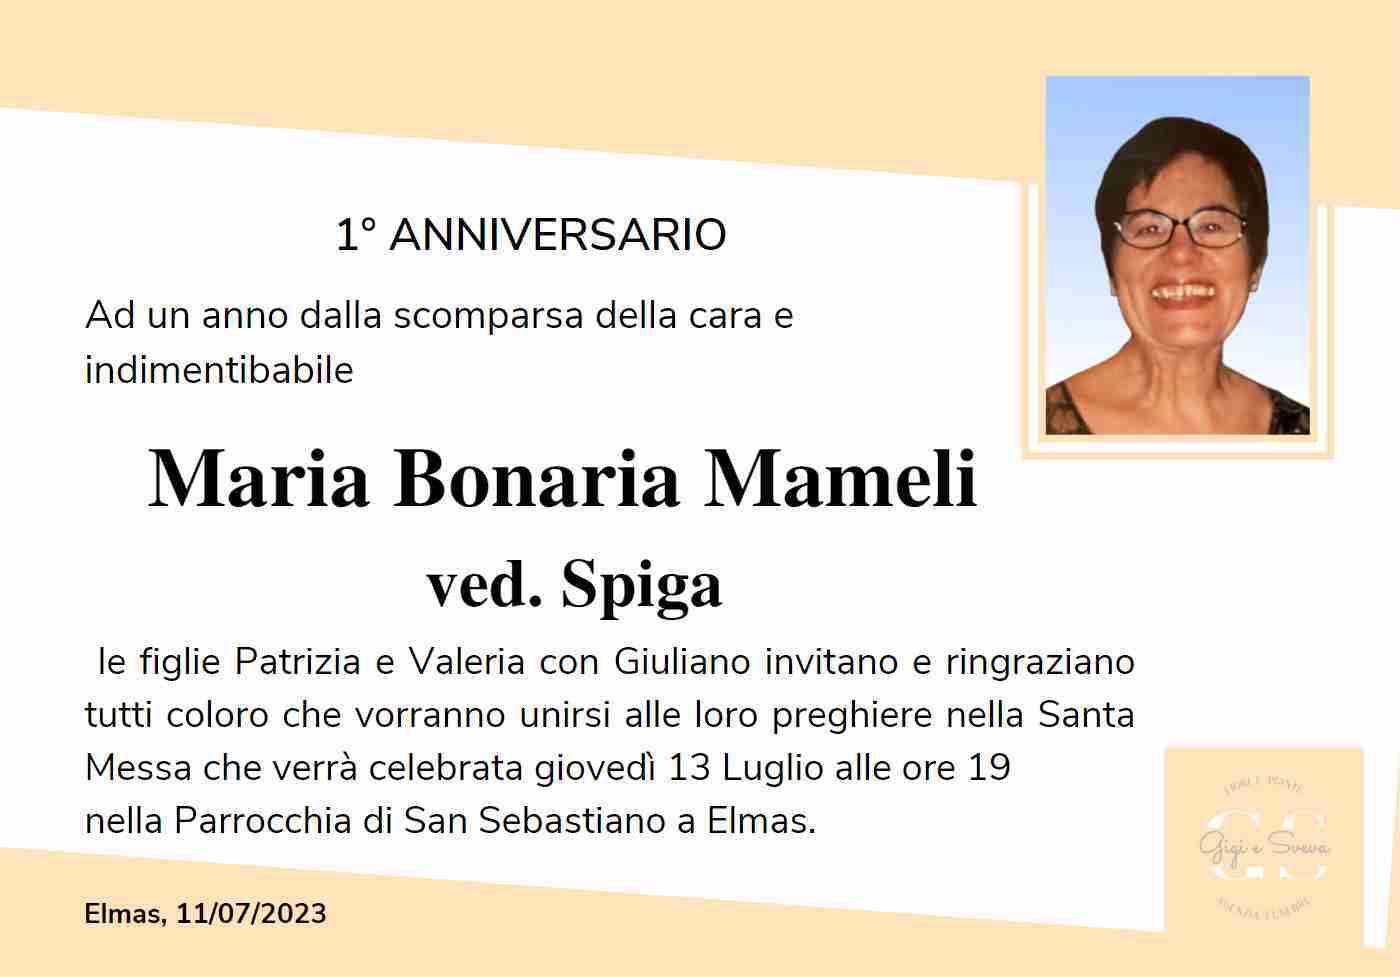 Maria Bonaria Mameli